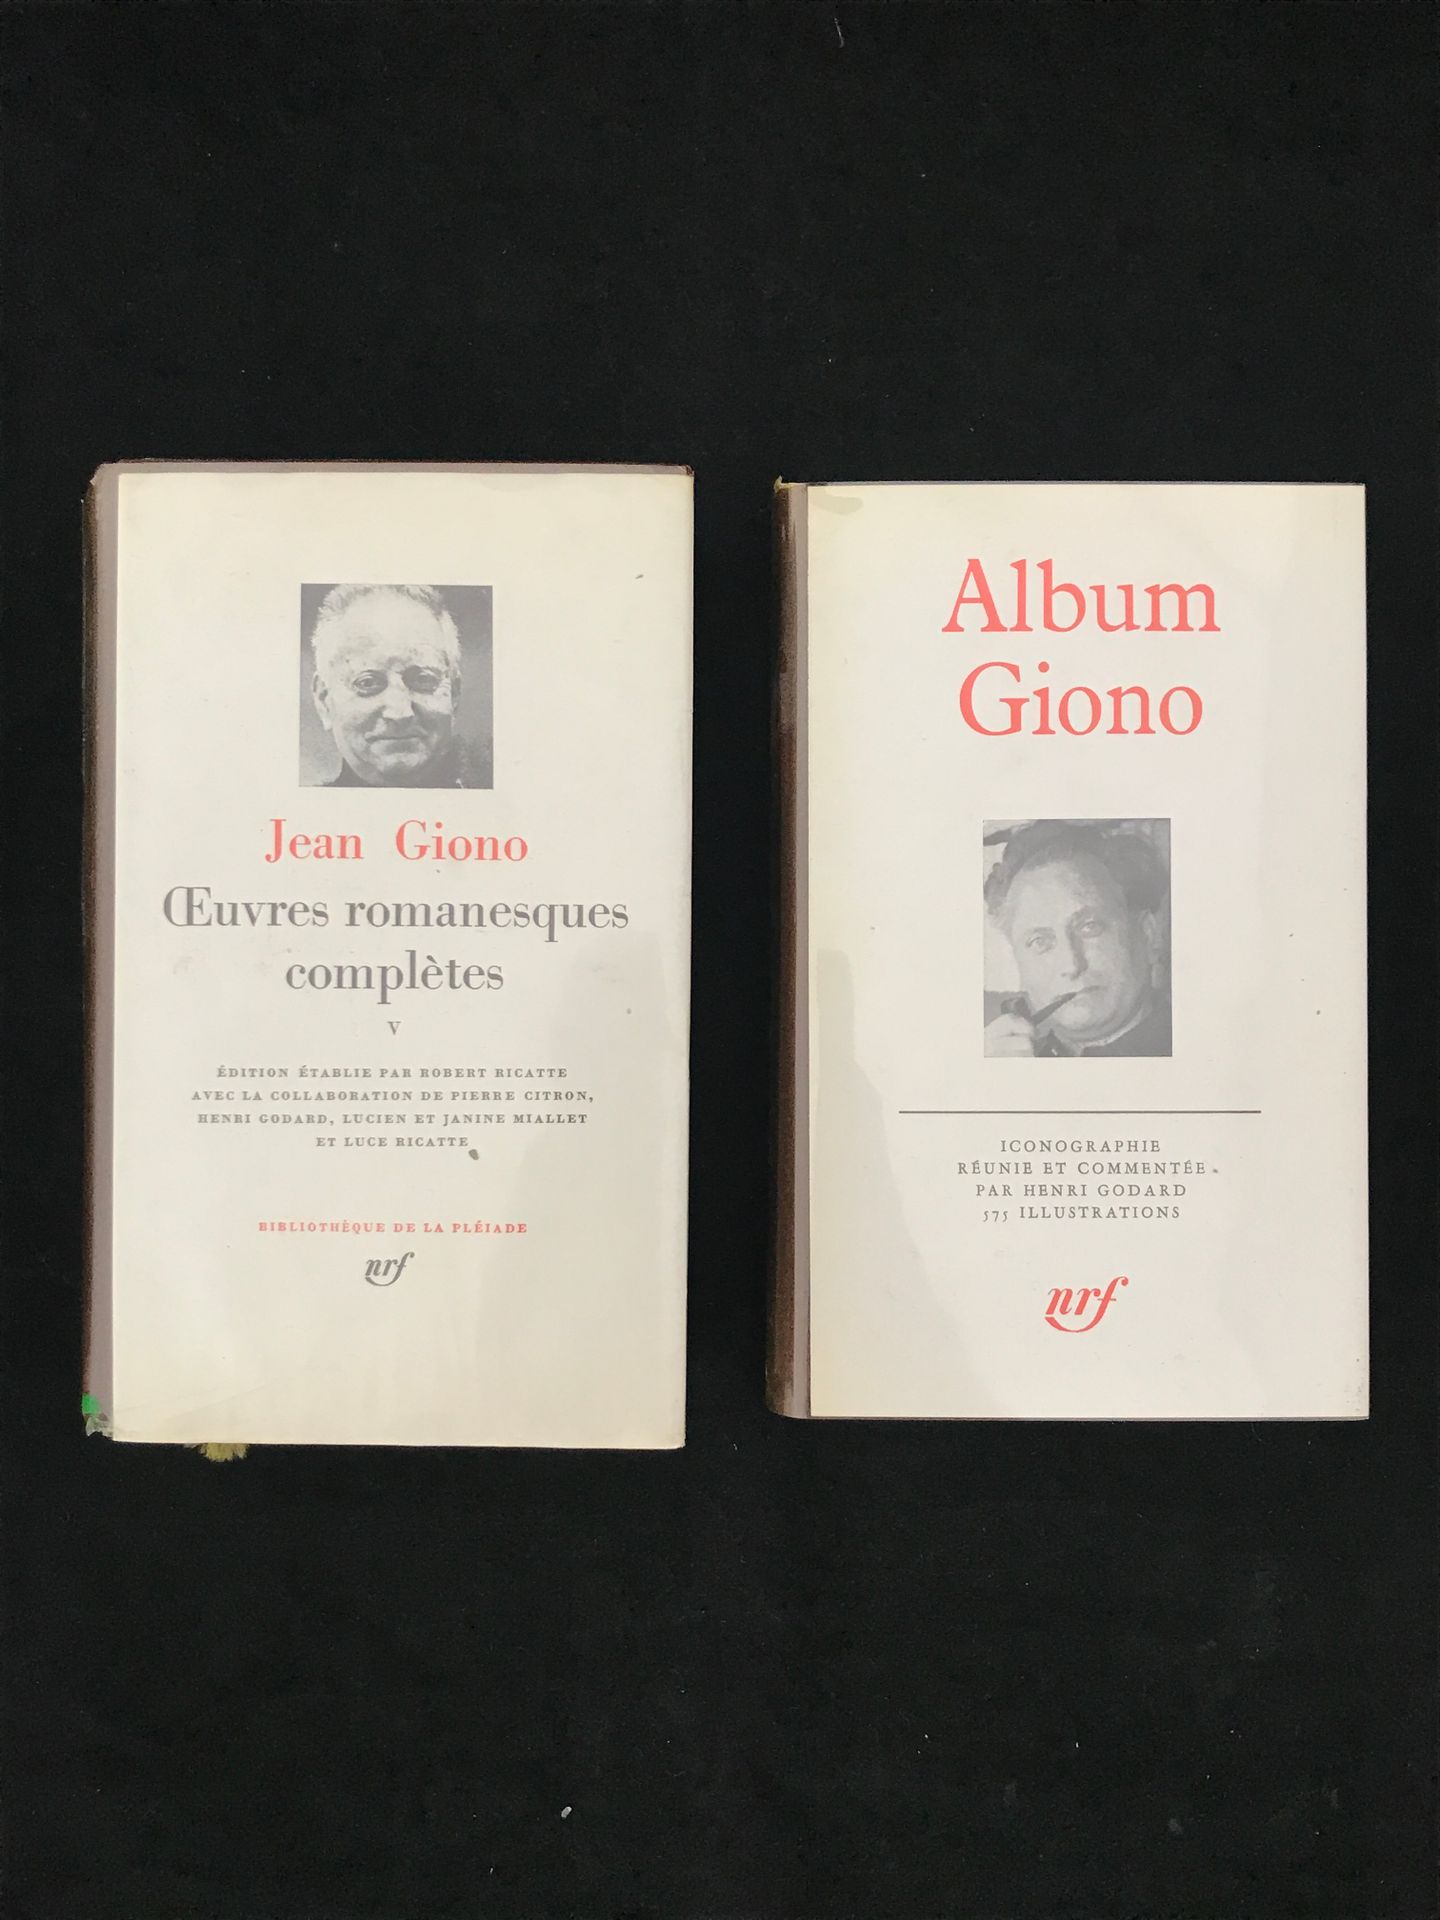 Null La Pléiade, set of two volumes including: 

- Jean GIONO, "Œuvres Romanesqu&hellip;